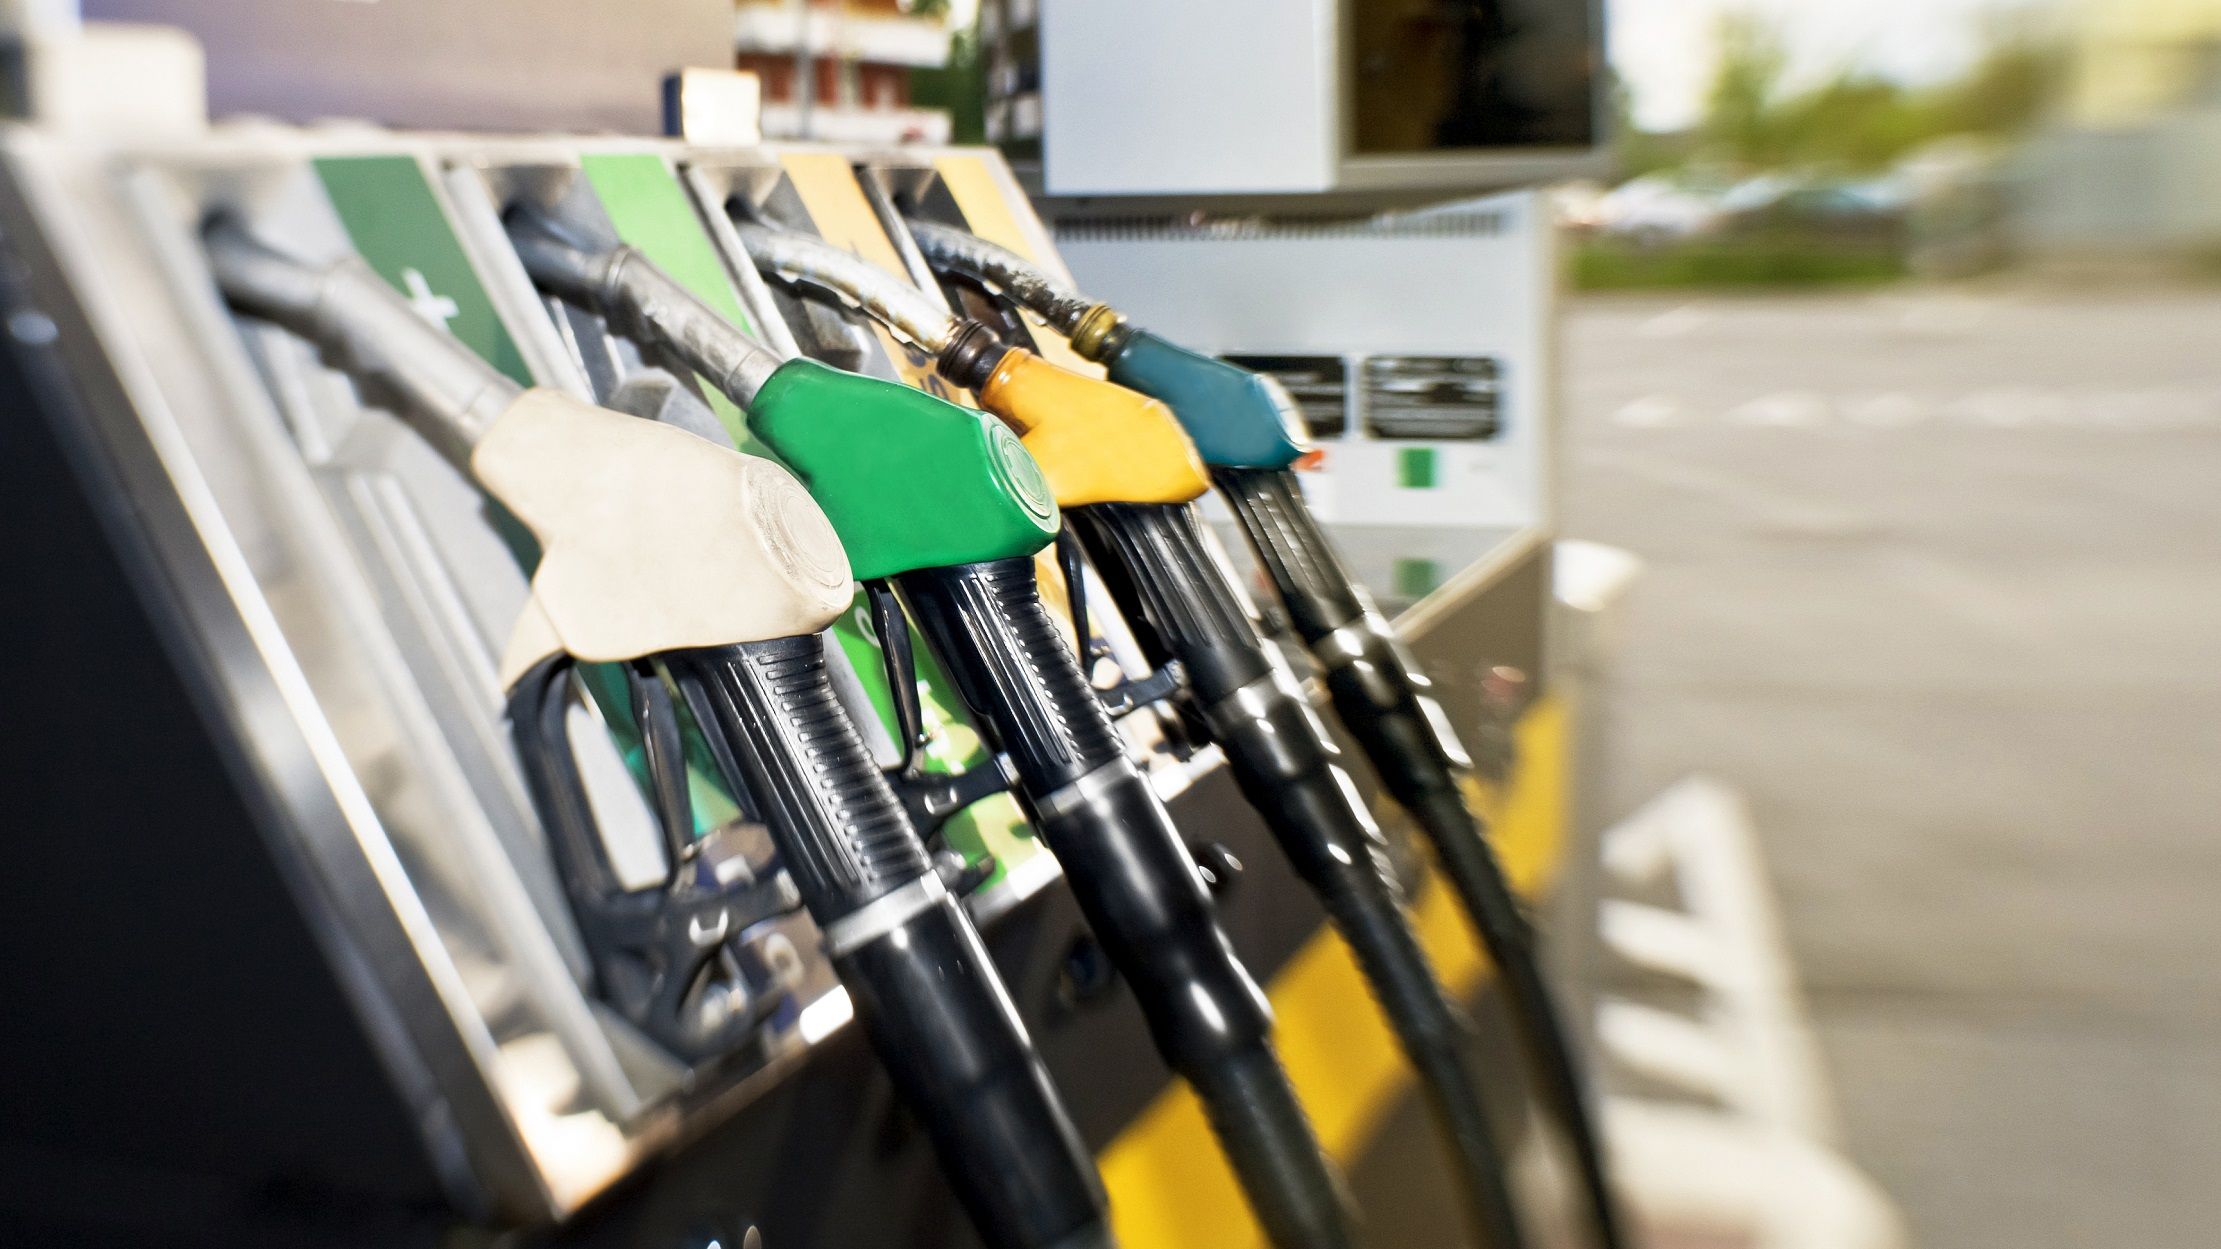 carburanți prețuri ANRE - AgroExpert.md